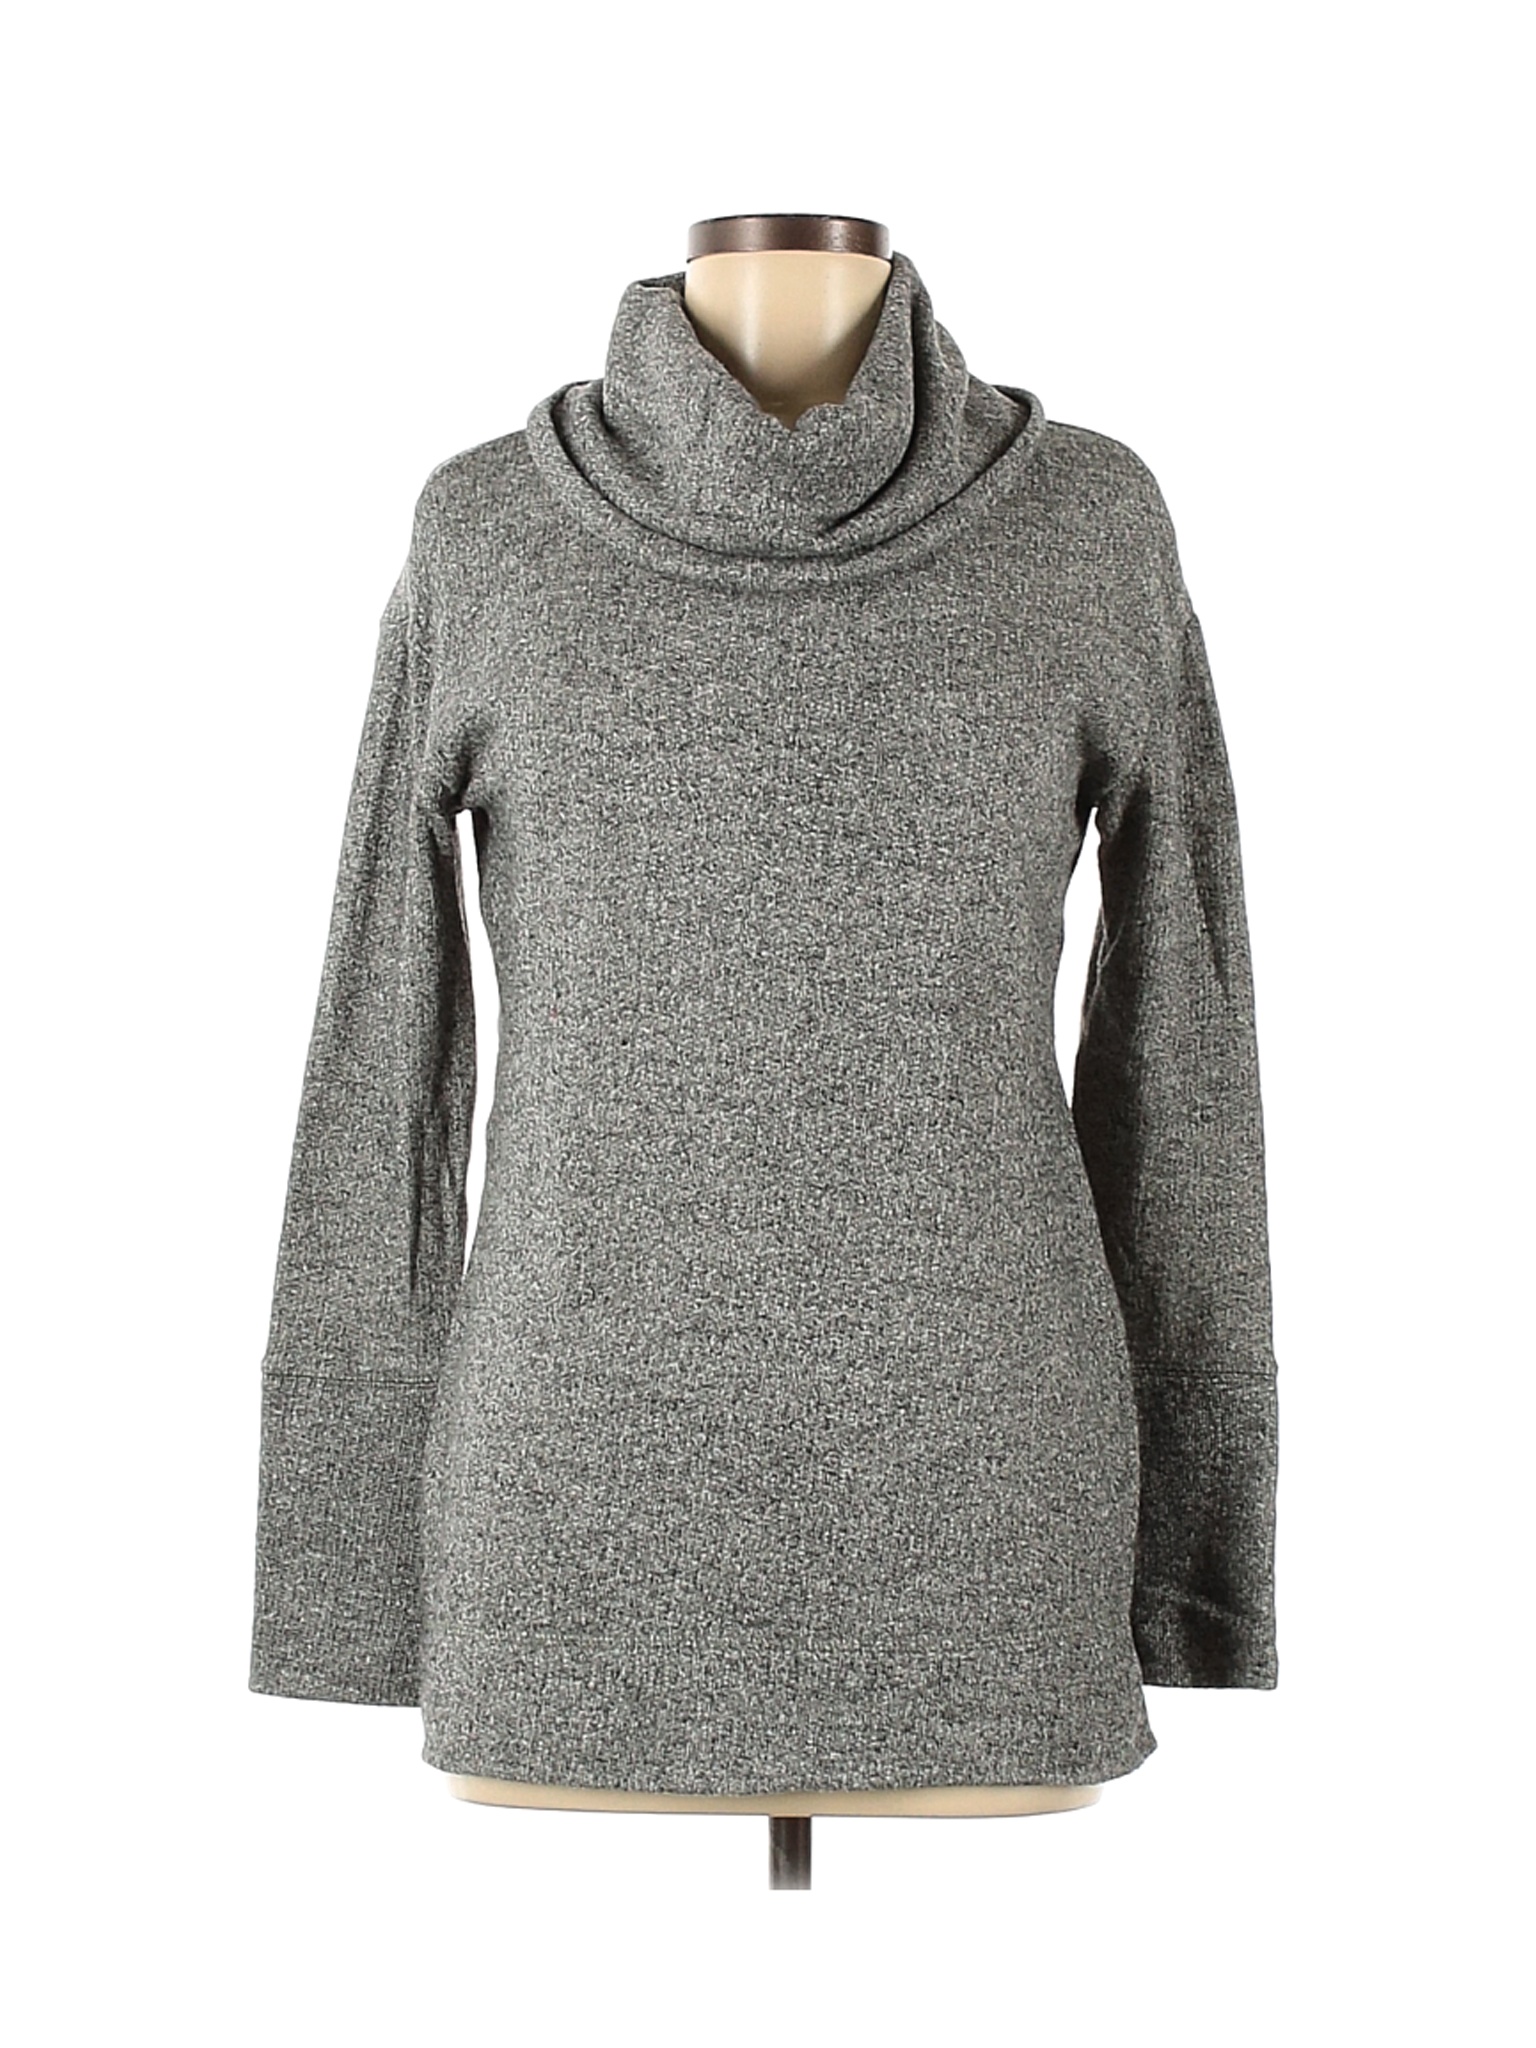 Merona Women Gray Pullover Sweater M | eBay